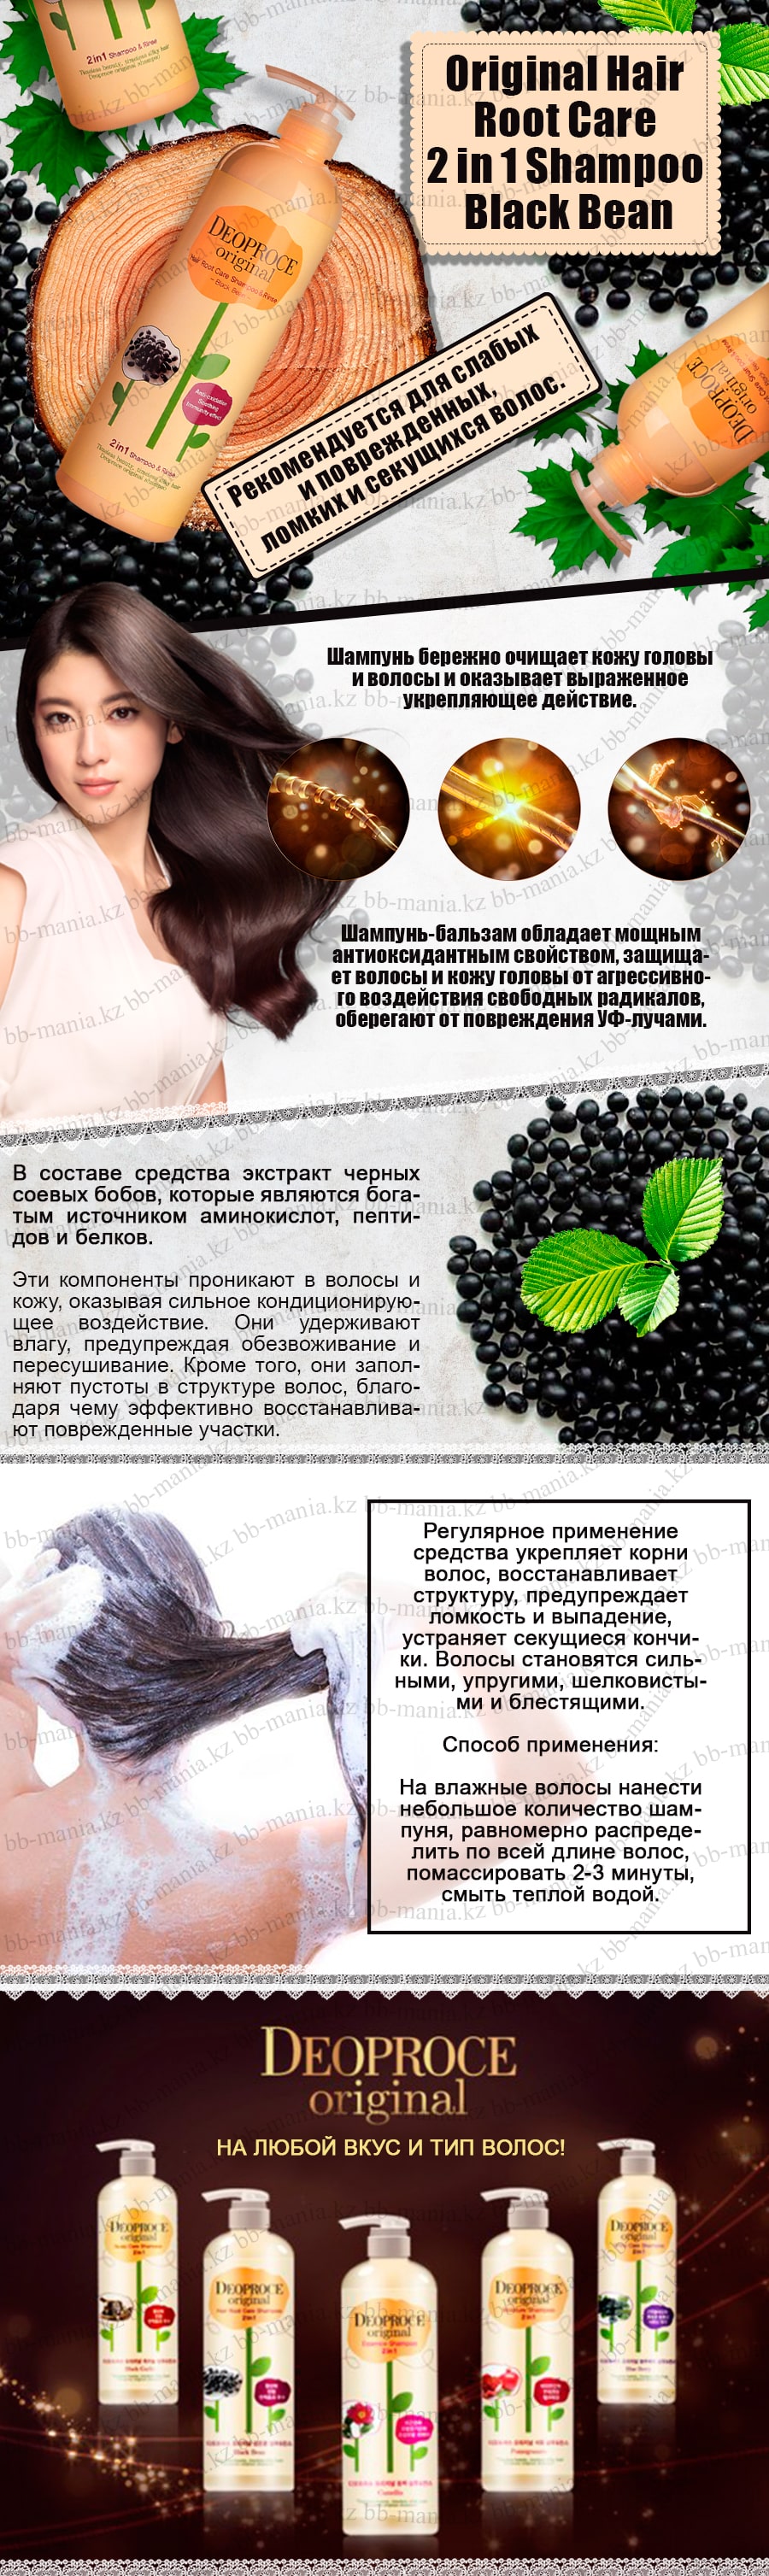 Original-Hair-Root-Care-2-in-1-Shampoo-Black-Bean-[Deoproce]-min